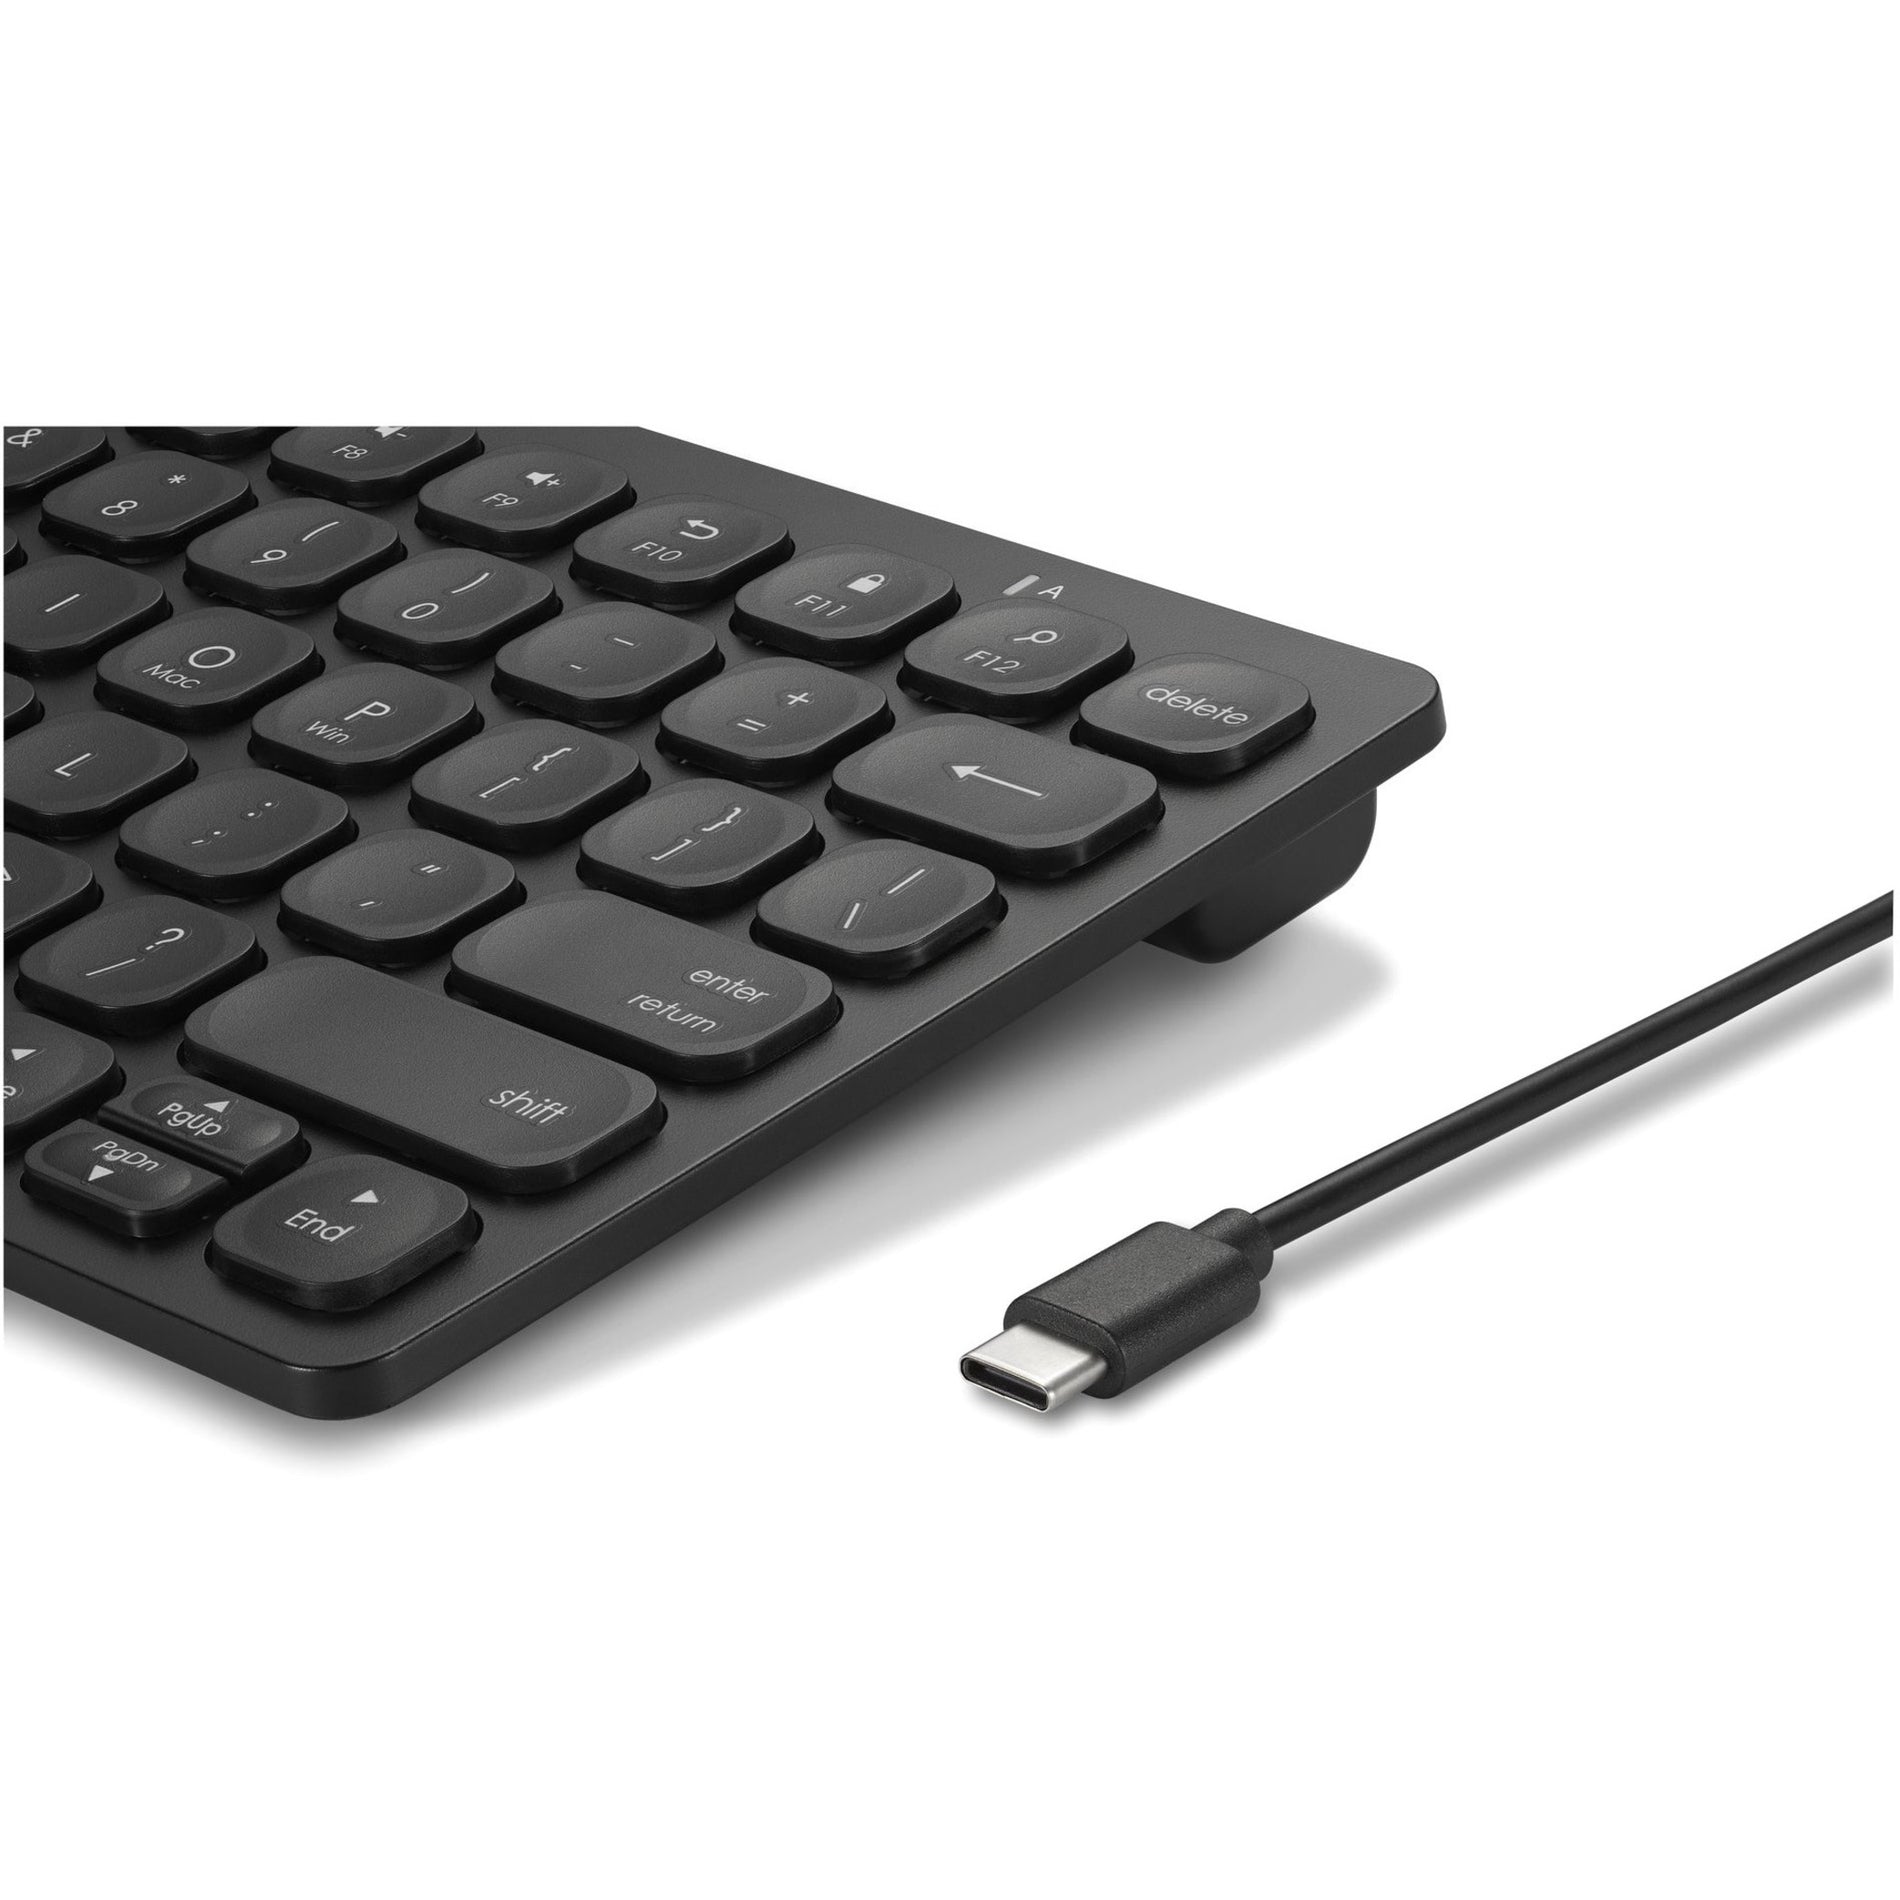 Kensington K75506US Compact Keyboard, 2 Year Warranty, USB Type C